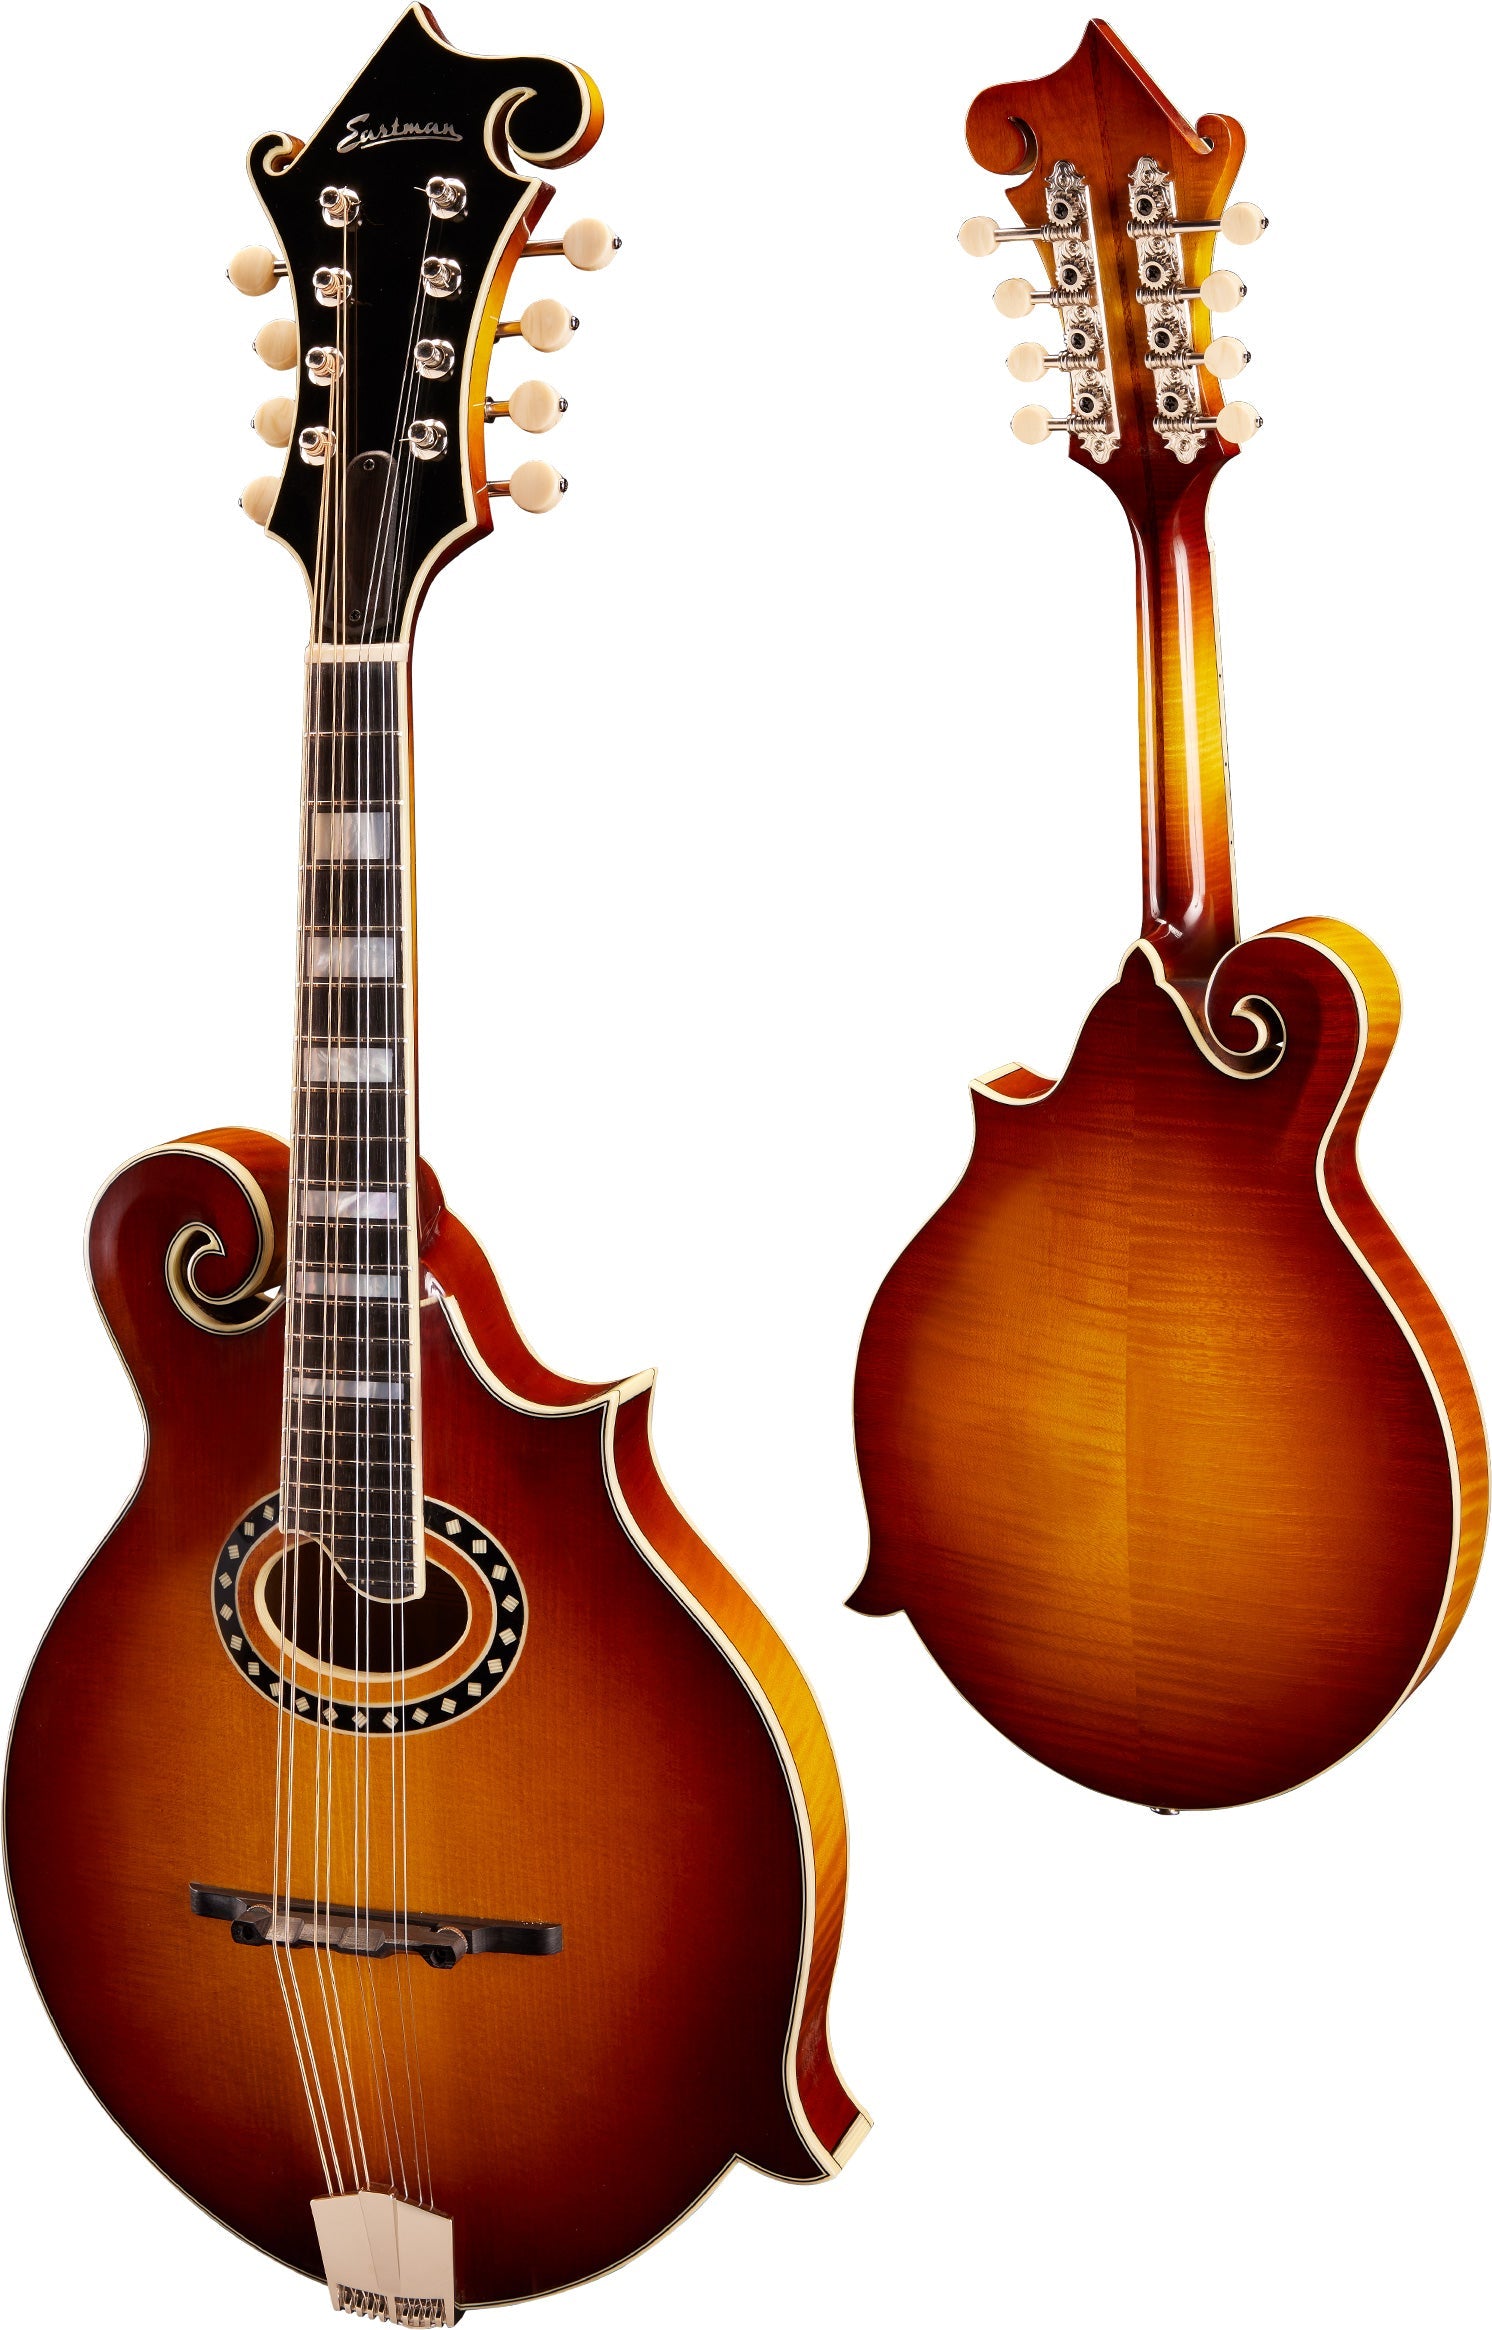 Eastman MD614 Goldburst F-style Oval Hole Mandolin, Mandolin for sale at Richards Guitars.